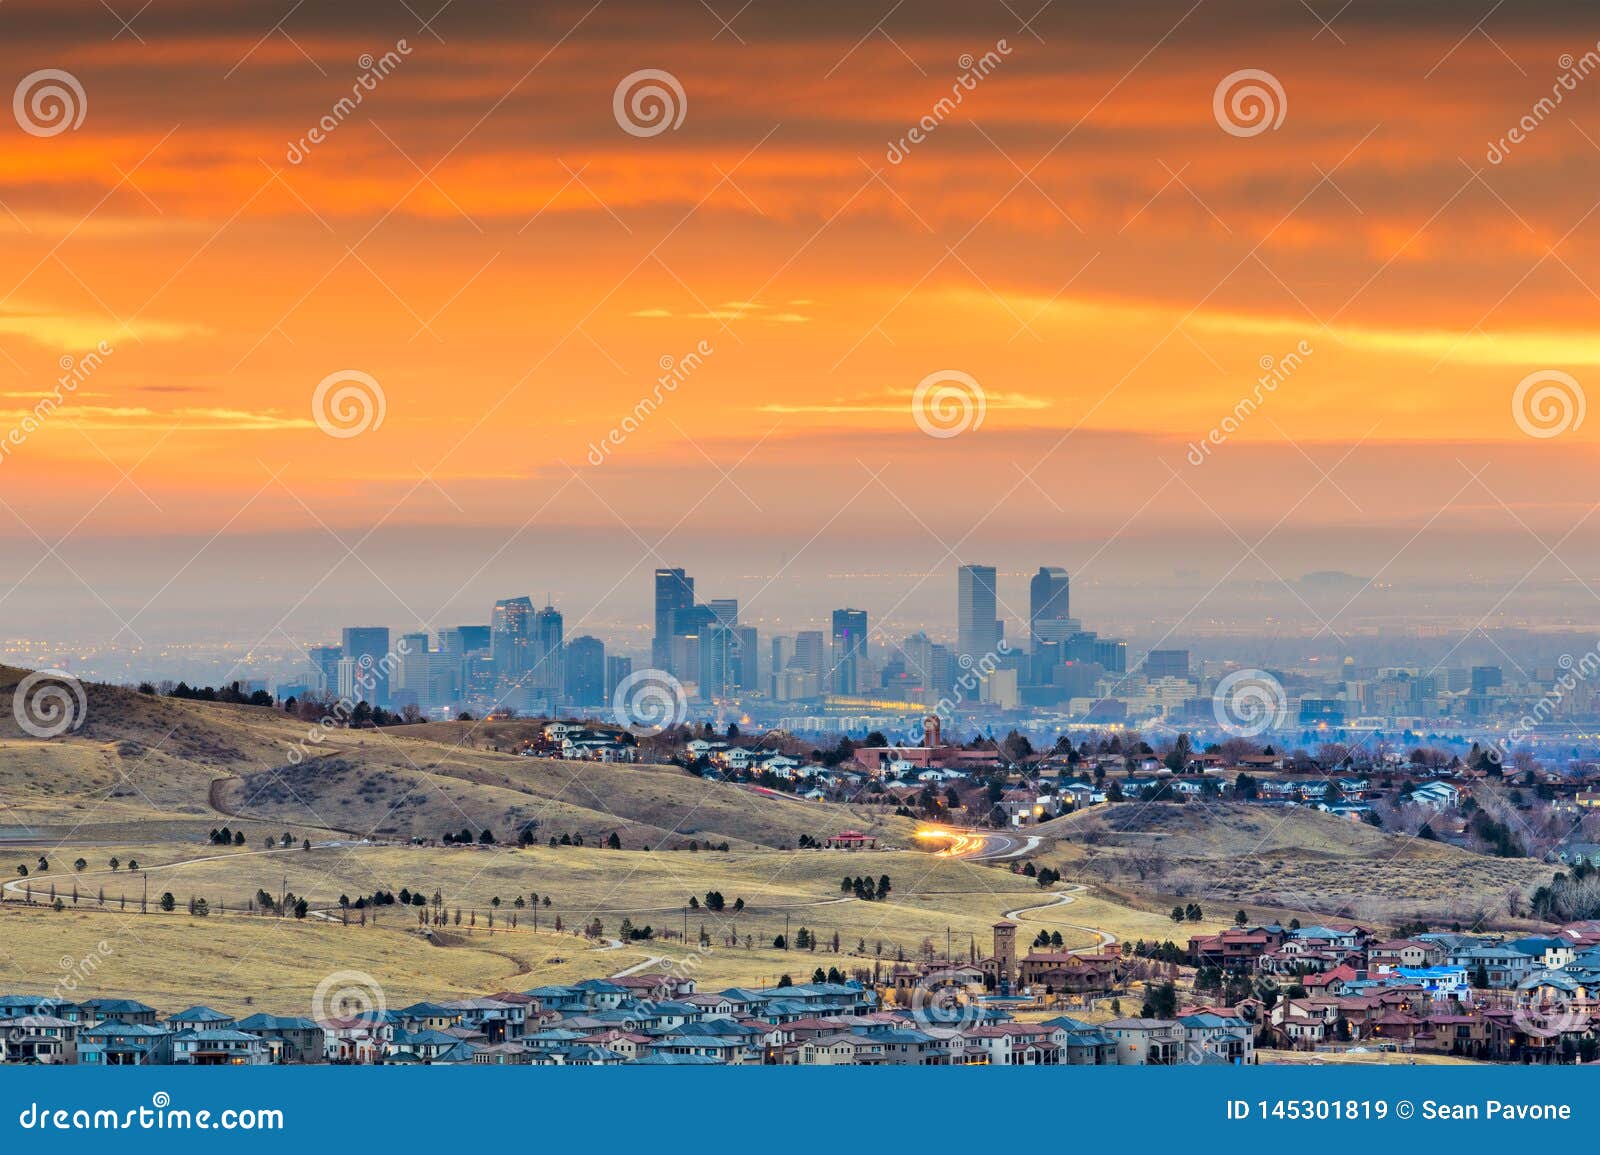 denver, colorado, usa downtown skyline viewed from red rocks